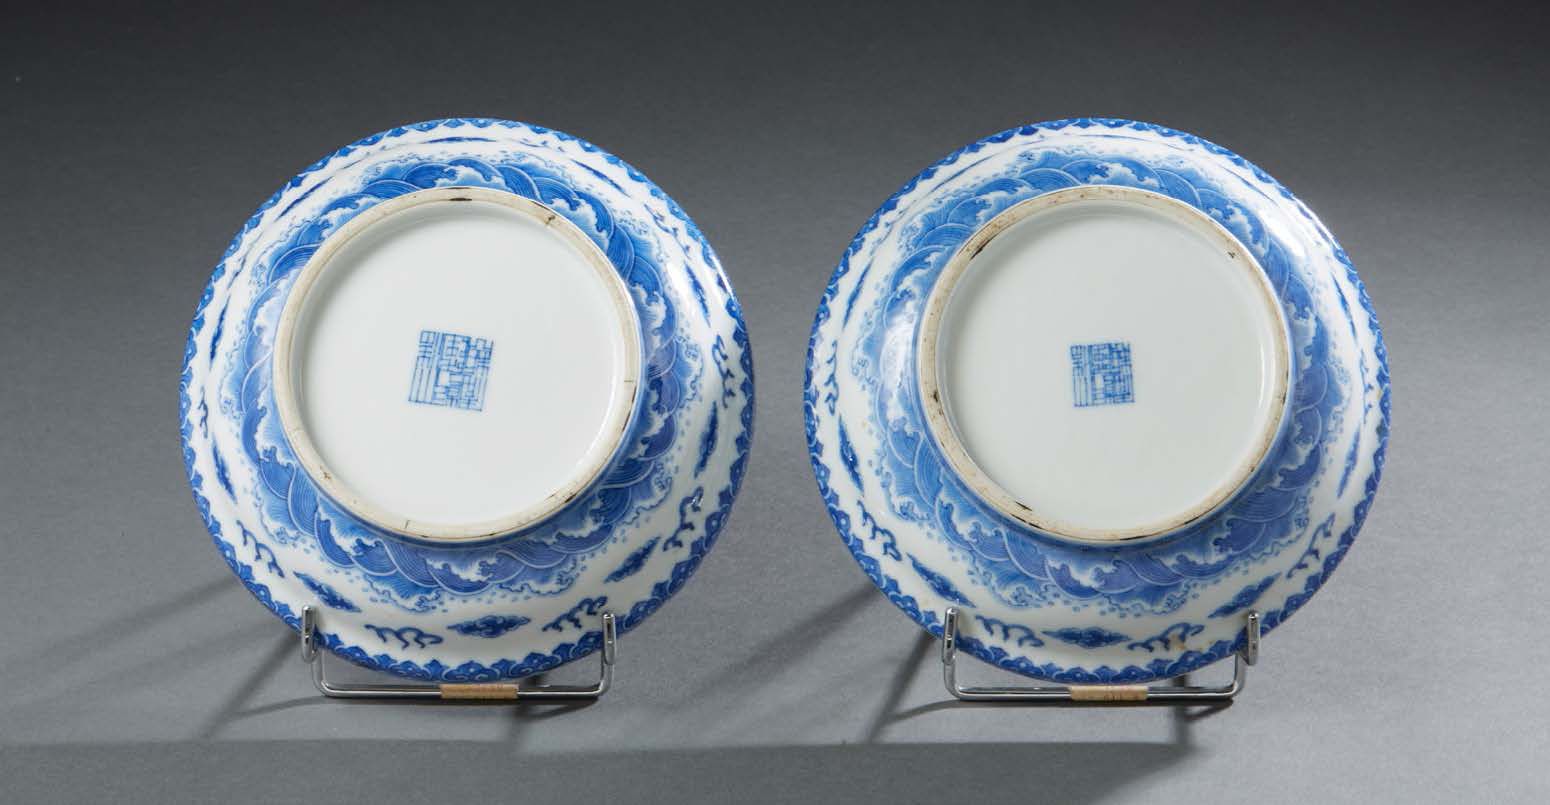 CHINE 一对圆形的瓷碗，外面用蓝色装饰着小波浪，火焰和云朵，周围有如意的楣子。
背面有乾隆年款
20世纪
直径：17.5厘米